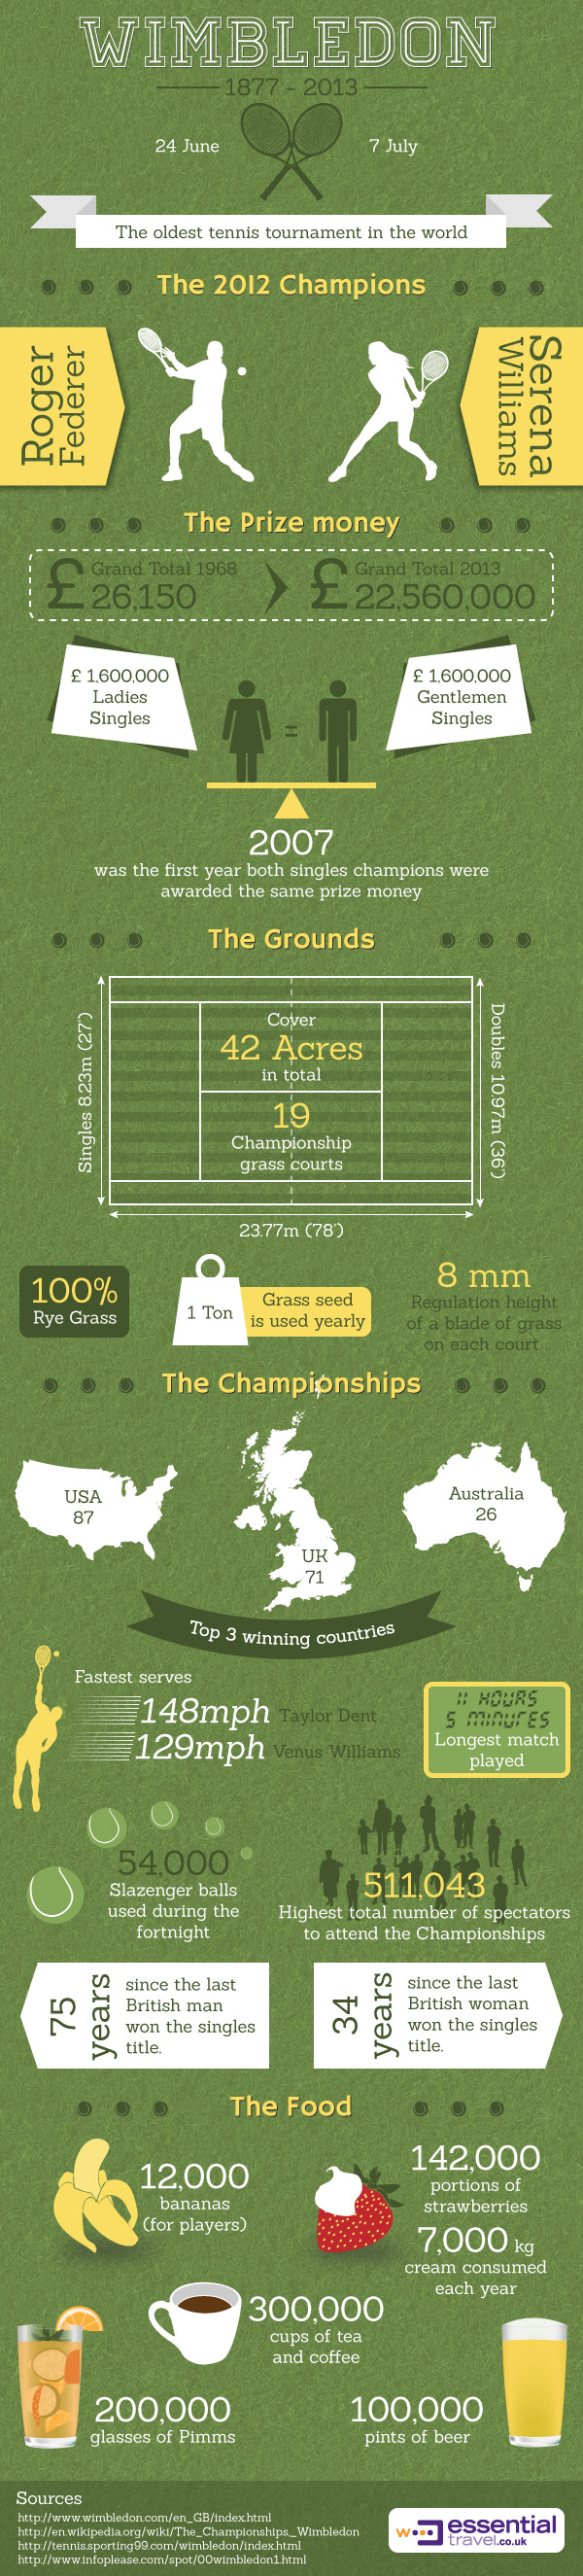 Wimbledon 2013 Infographic